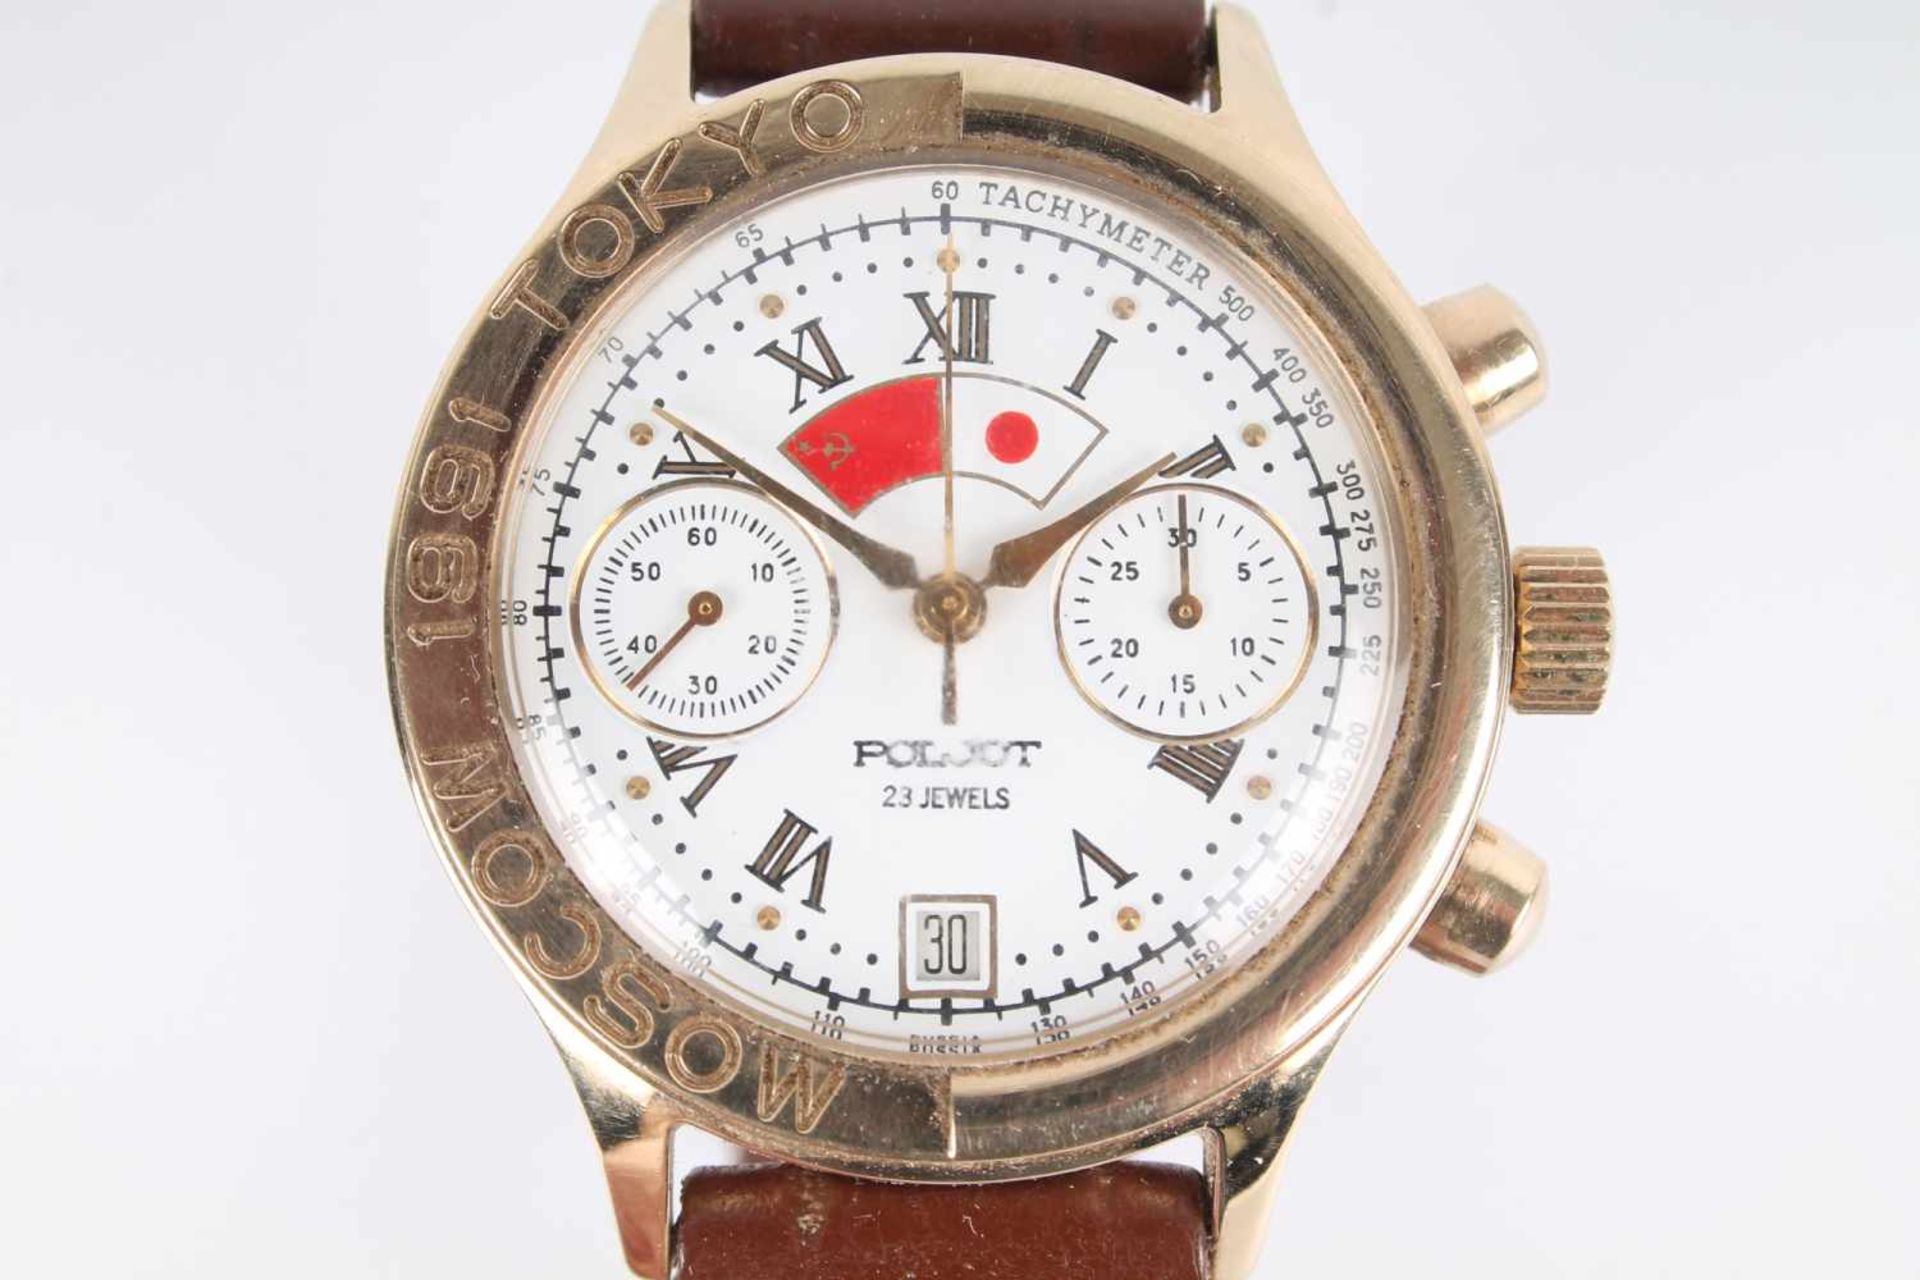 Chronograph Poljot Moscow Tokyo 1991, russian watch, - Image 2 of 5